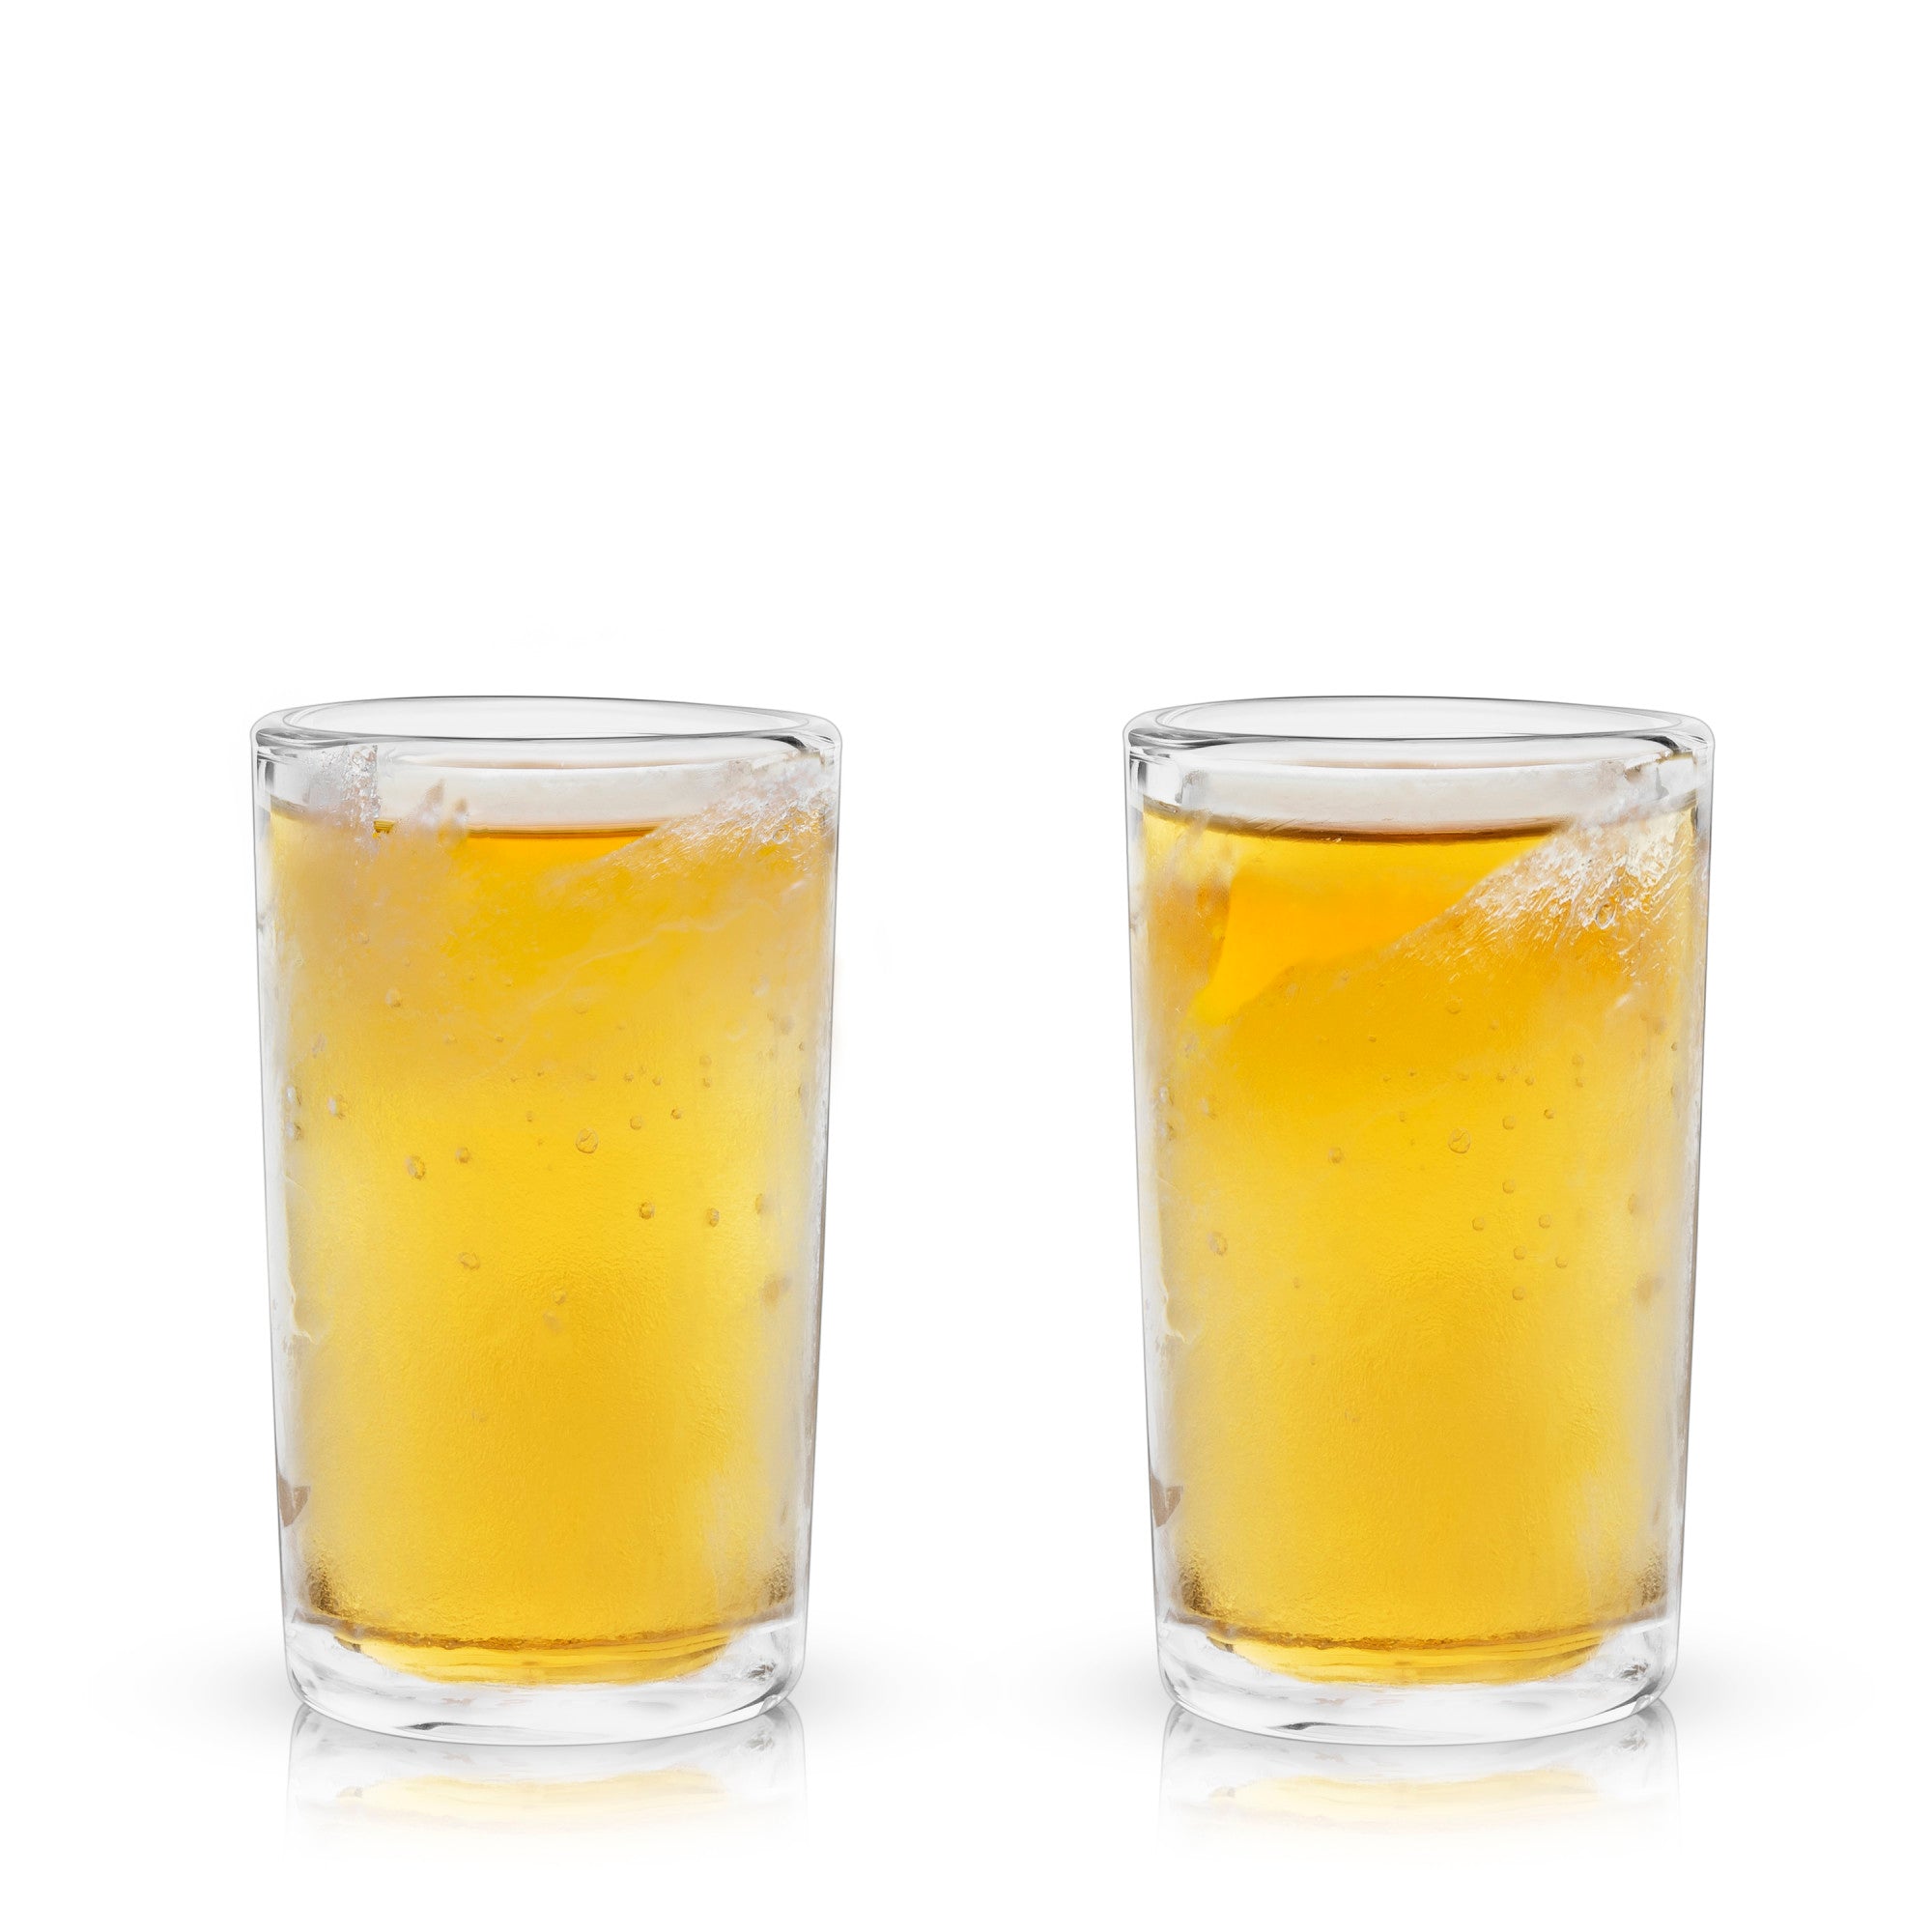 Glacier™ Double-Walled Chilling Shot Glasses by Viski® (7336) Drinkware Viski